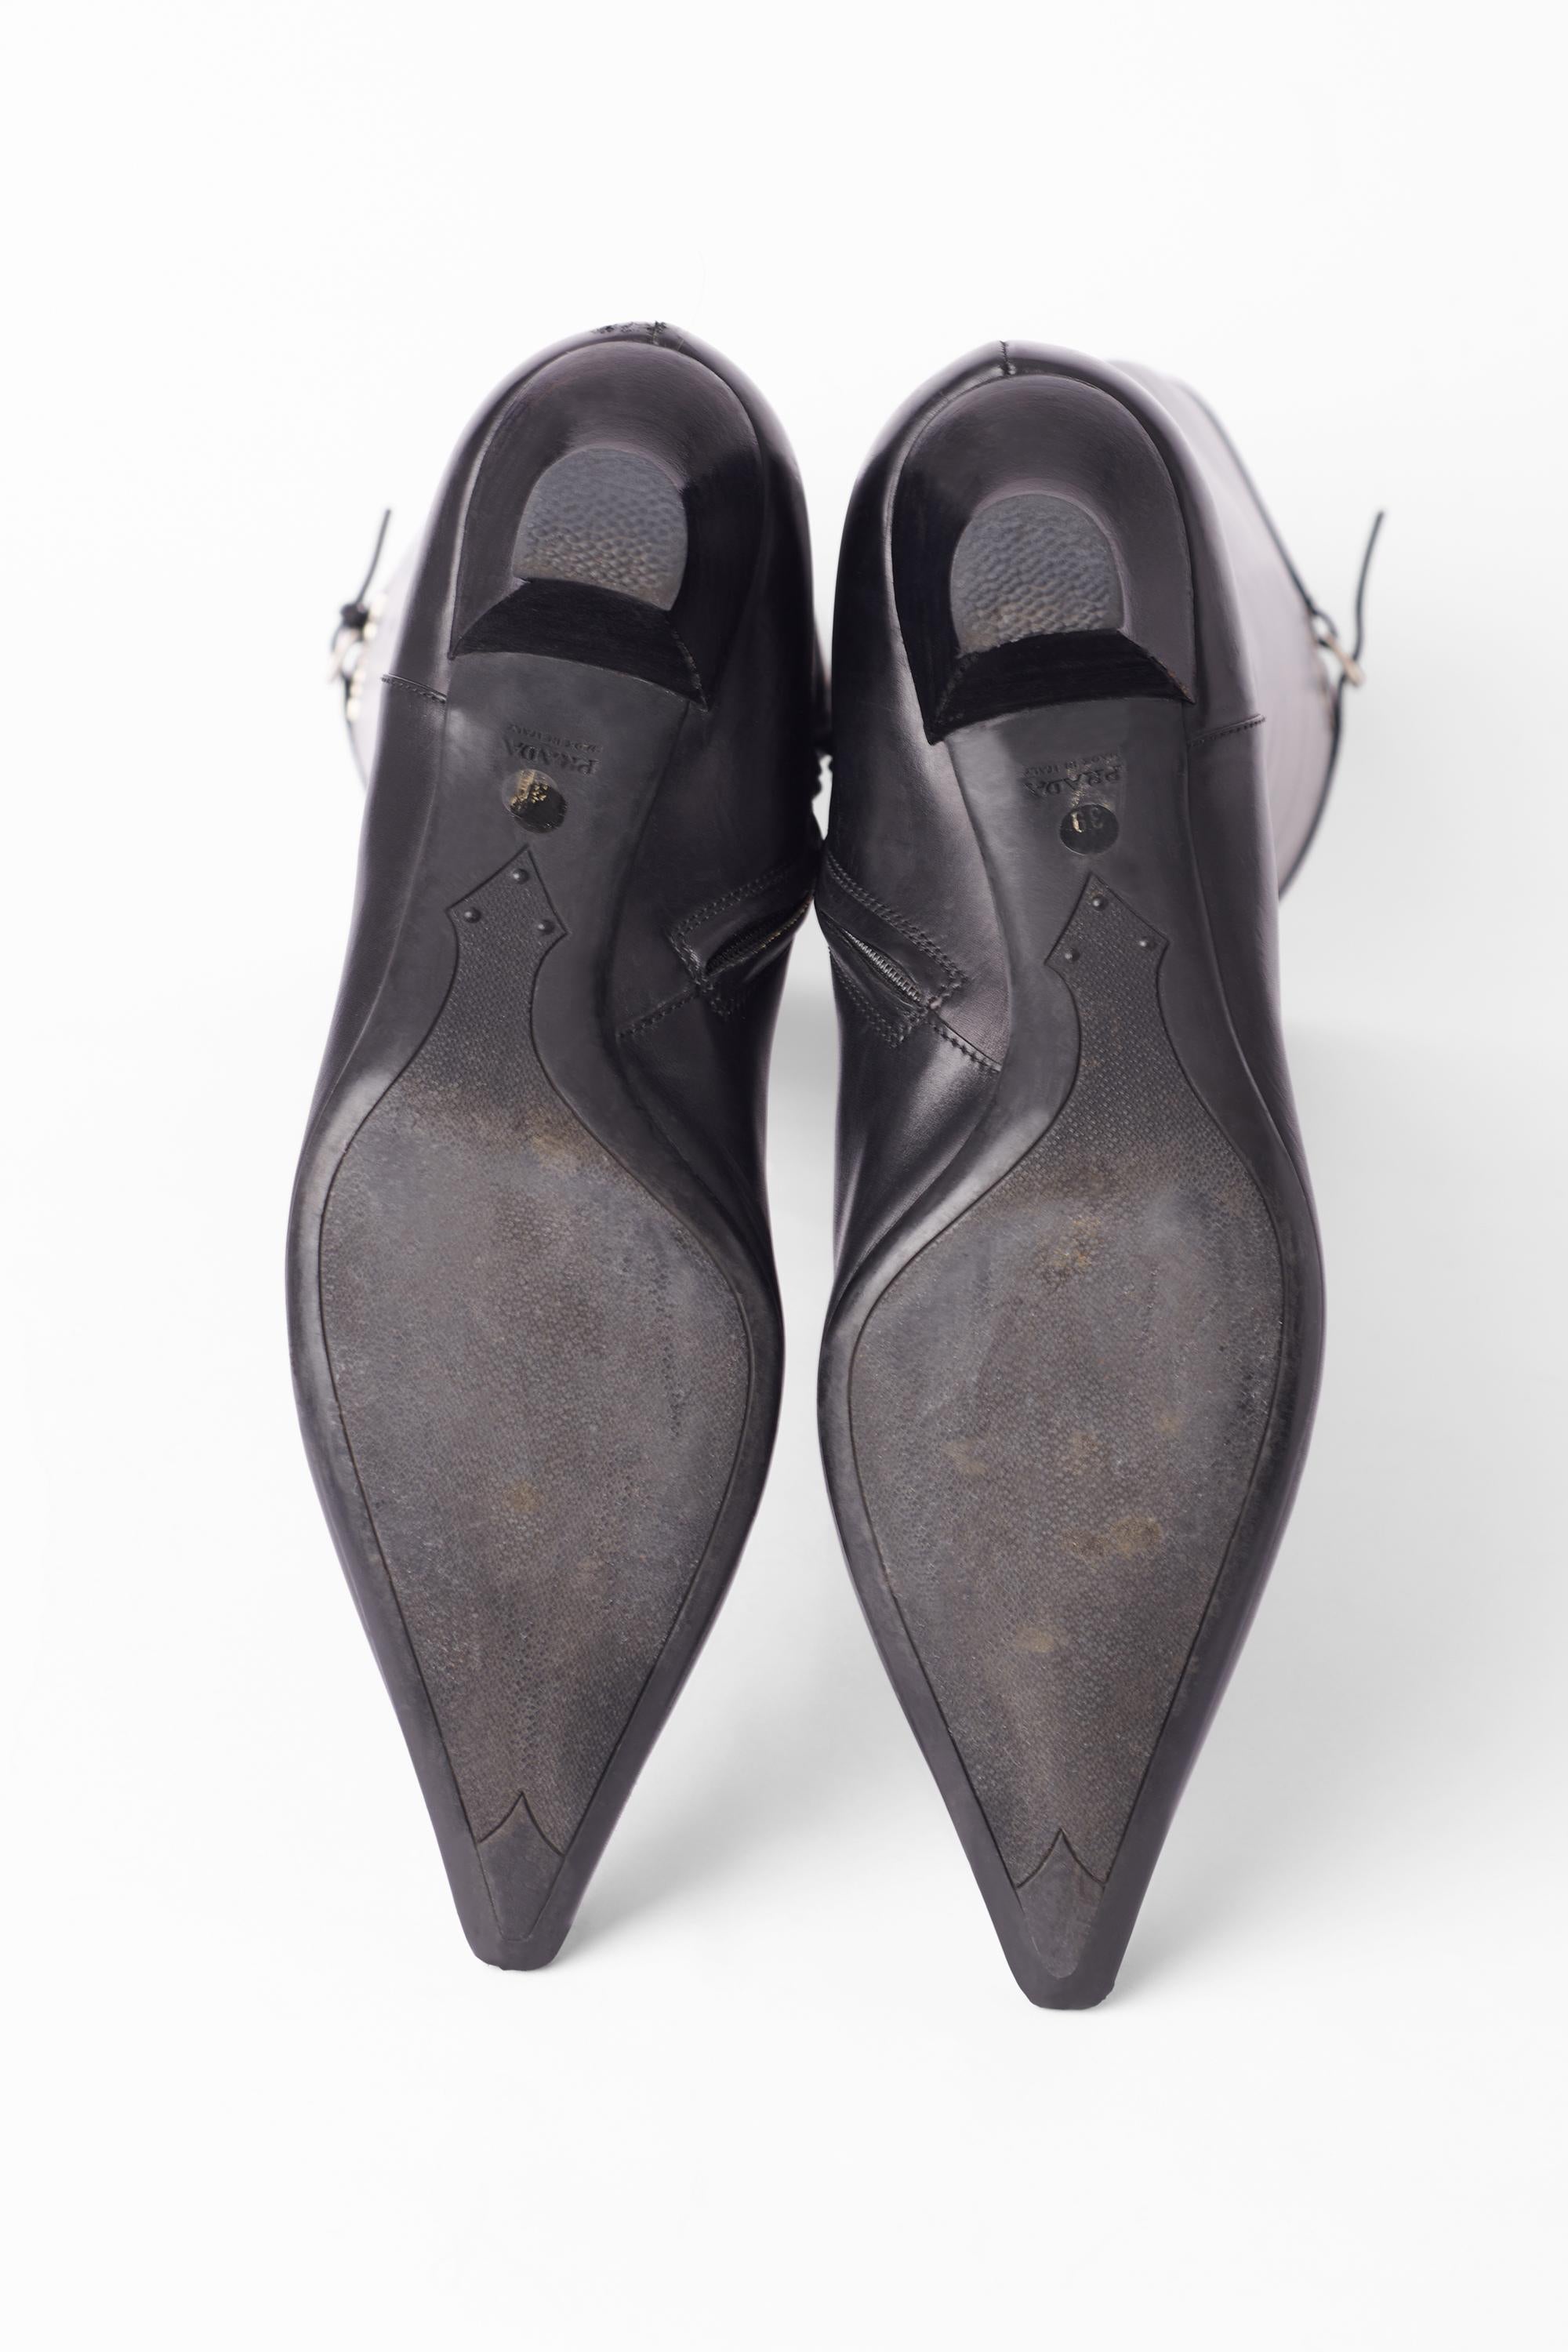 Vintage 2000’s Black Leather Kitten Heels Boots For Sale 1